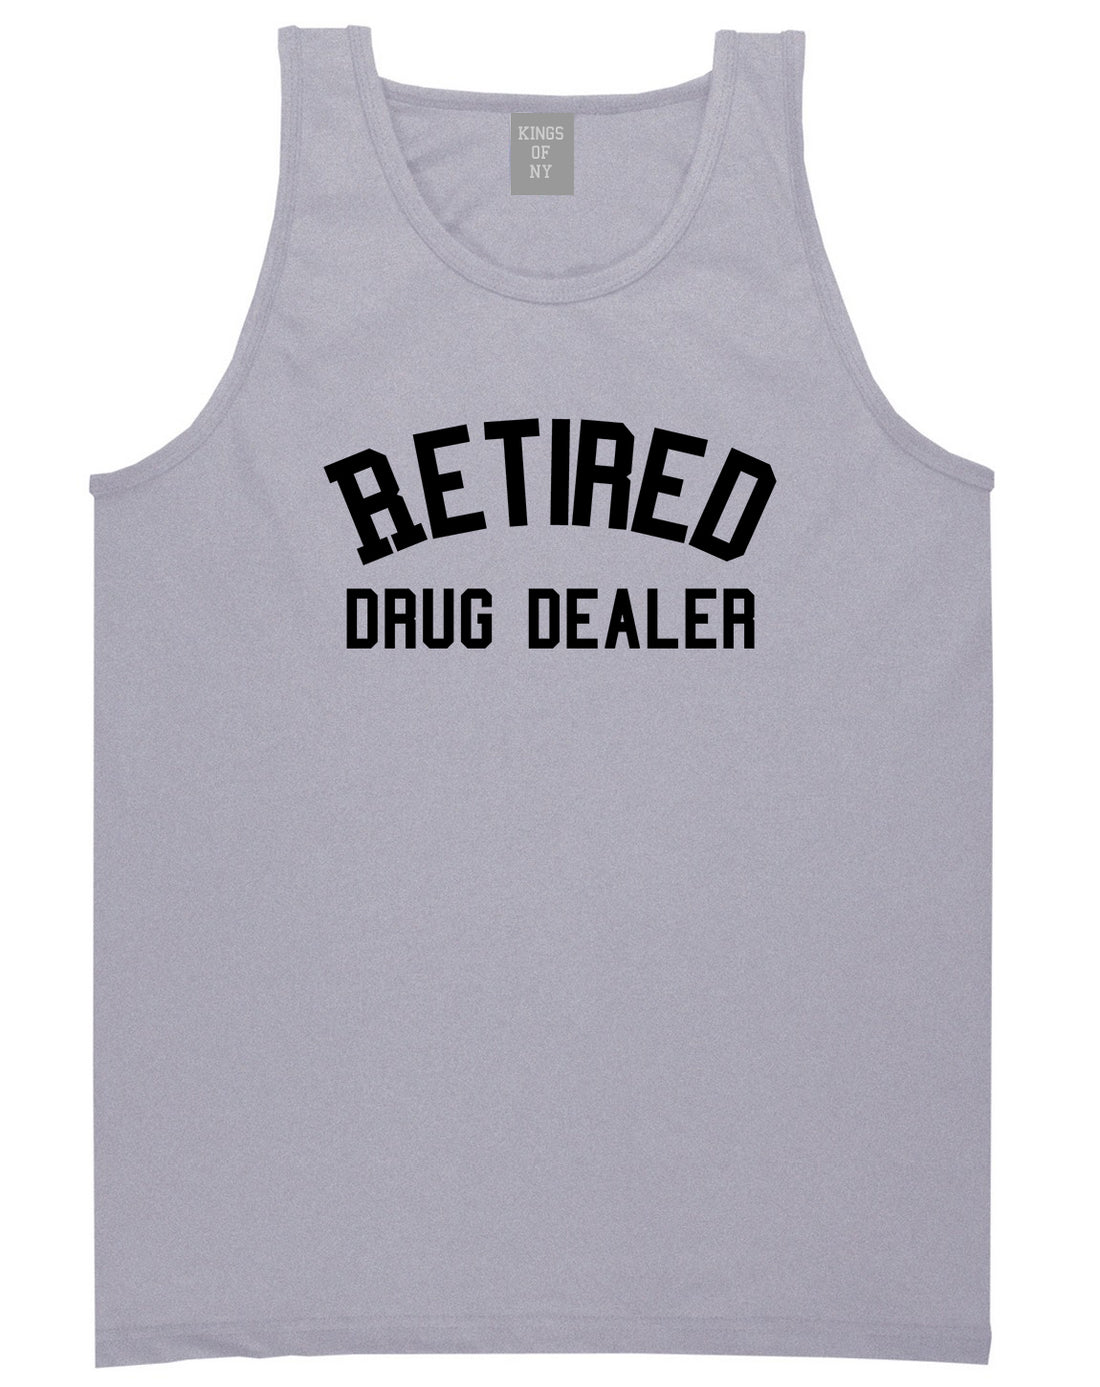 Retired_Drug_Dealer Mens Grey Tank Top Shirt by Kings Of NY